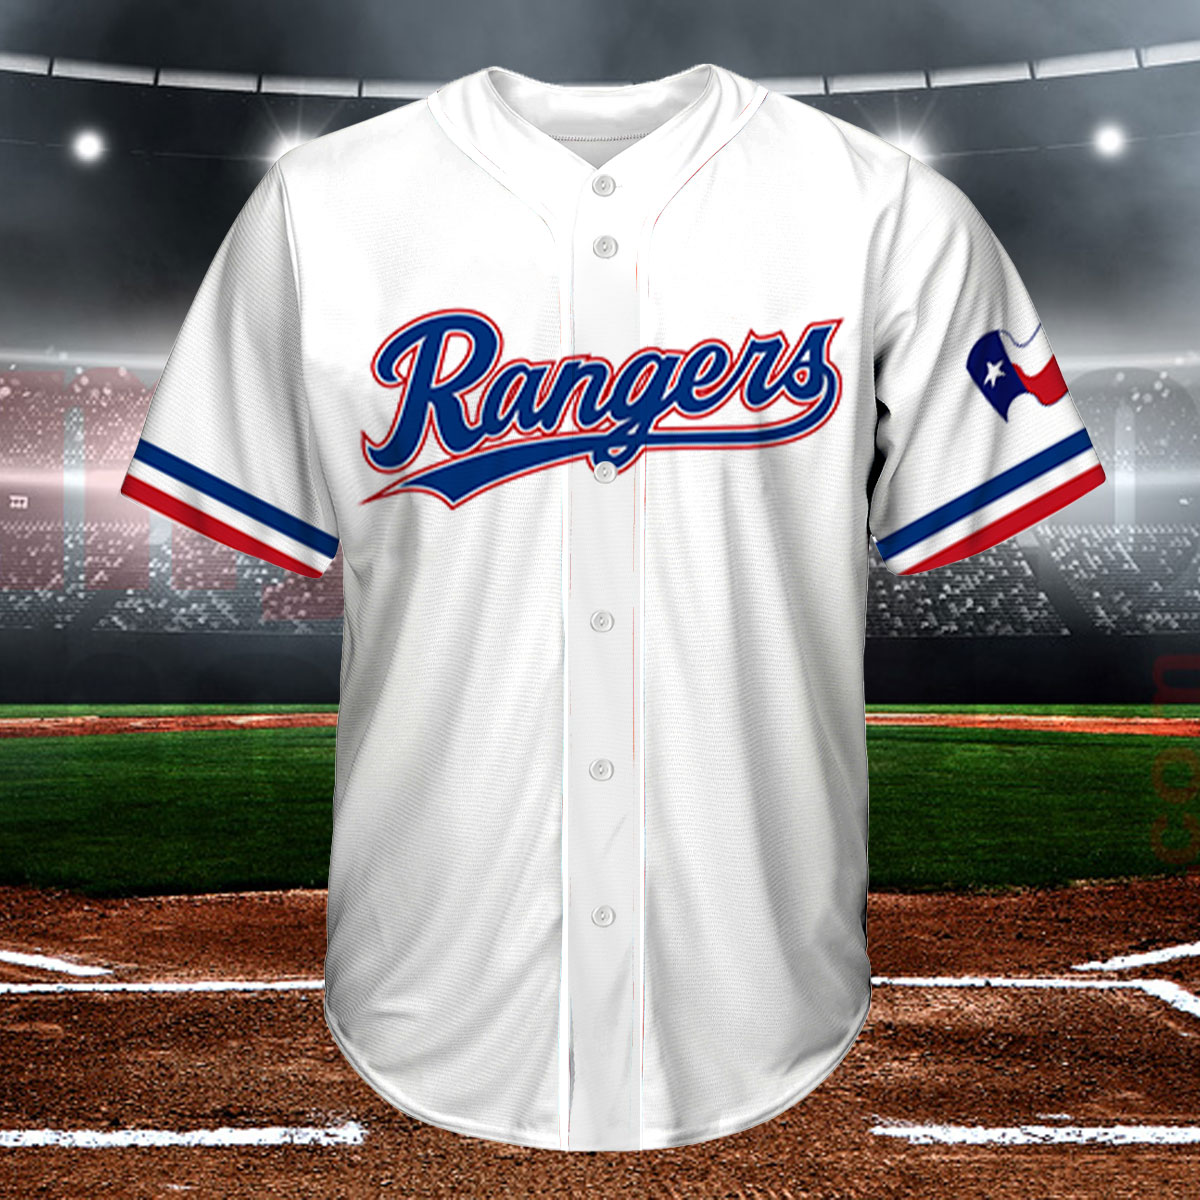  Texas Rangers Jersey